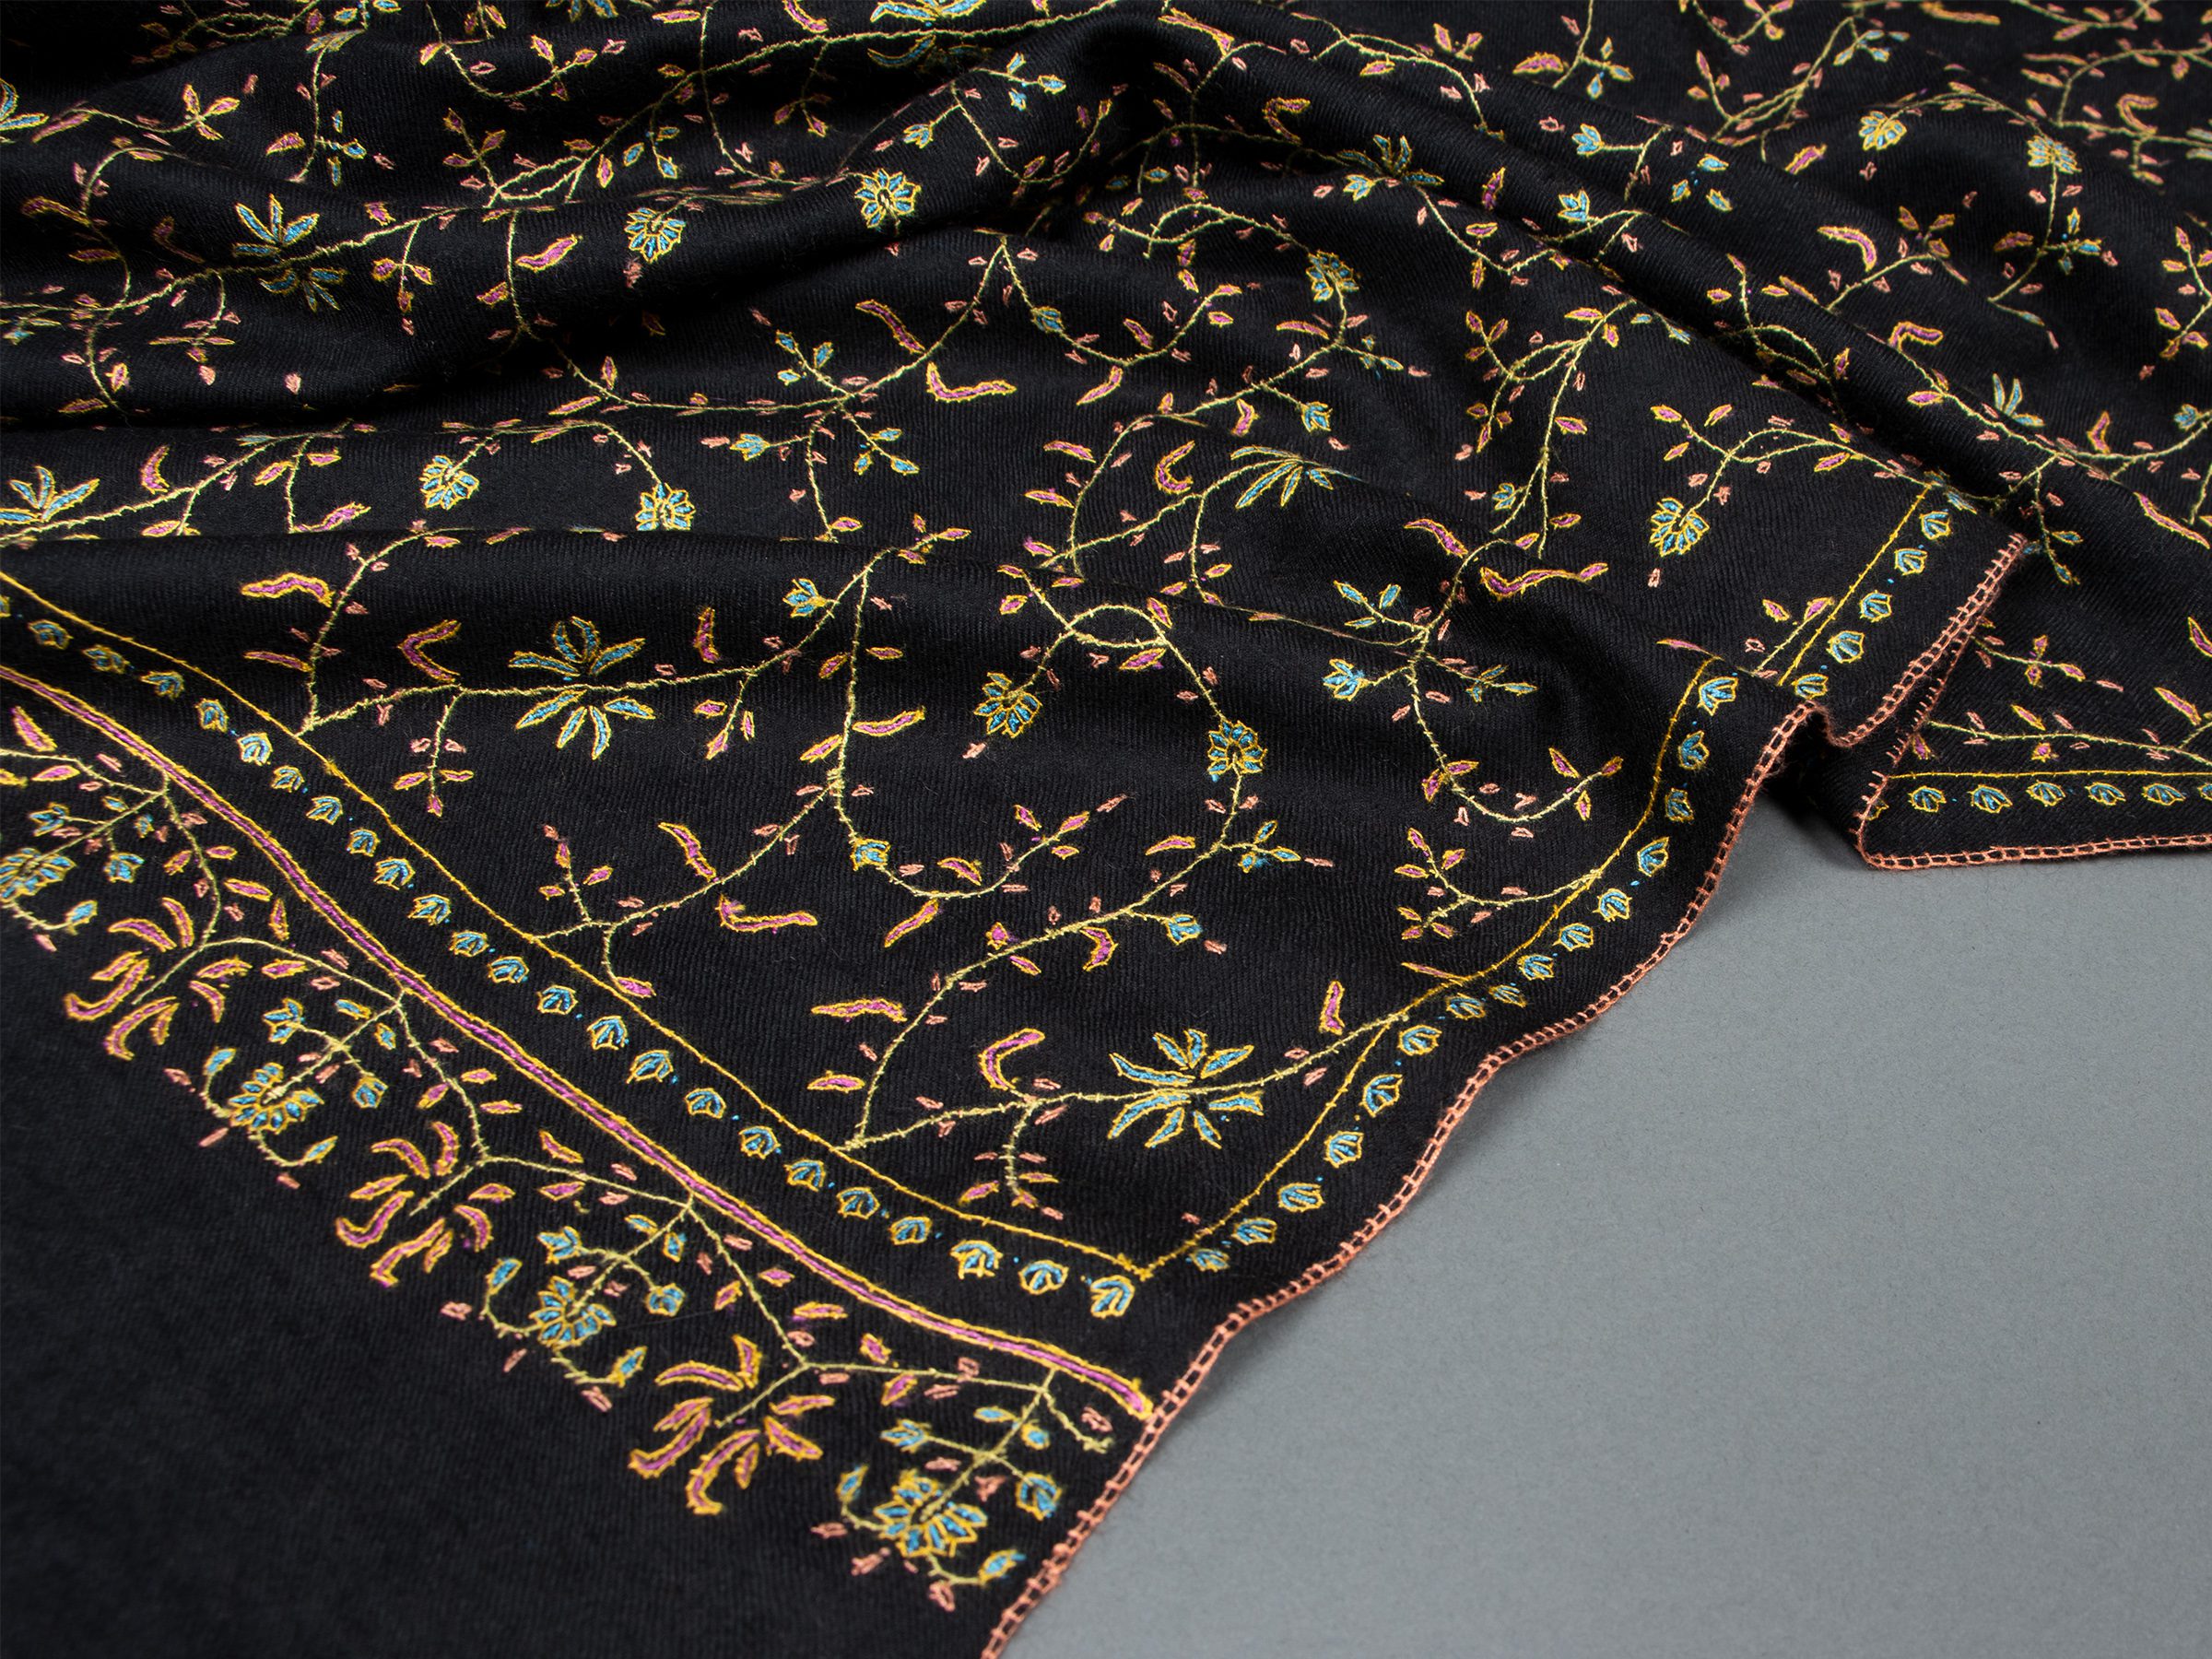 Infinite Night Sky: Black Embroidery Pashmina Shawl